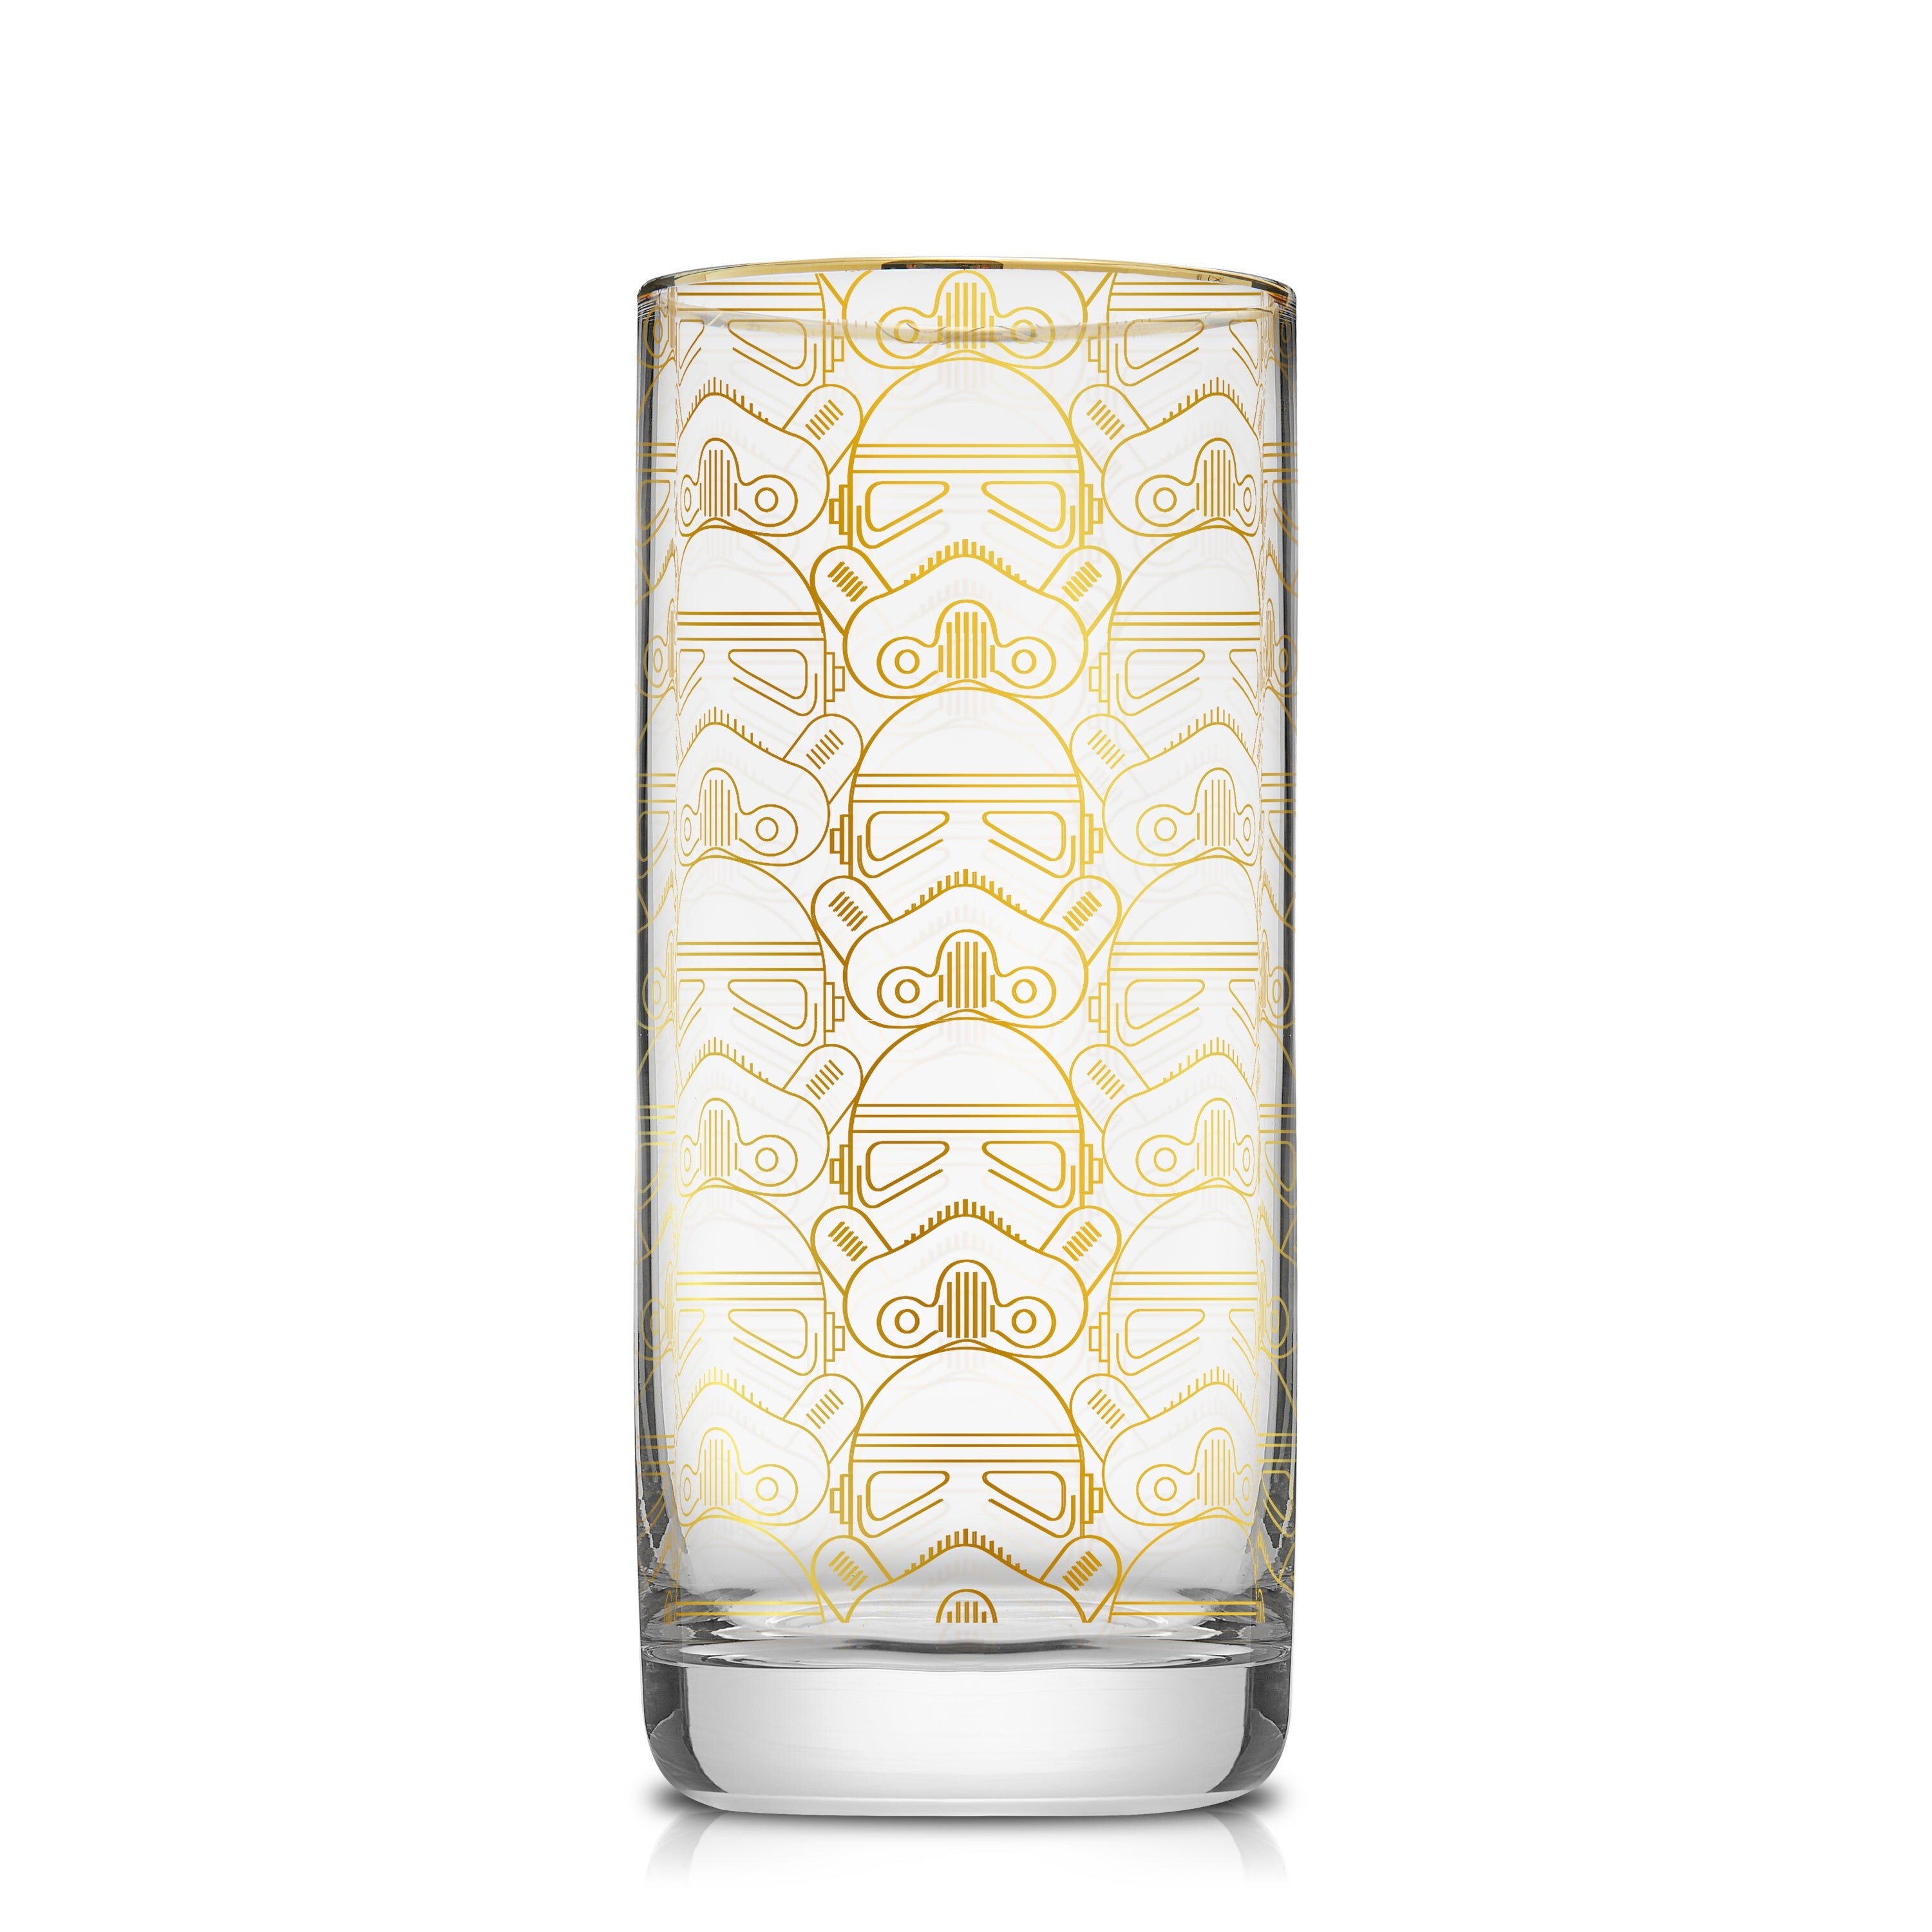 Star Wars Deco Gold Glass Tall Drinking Glasses - 13.5 oz - Set of 4